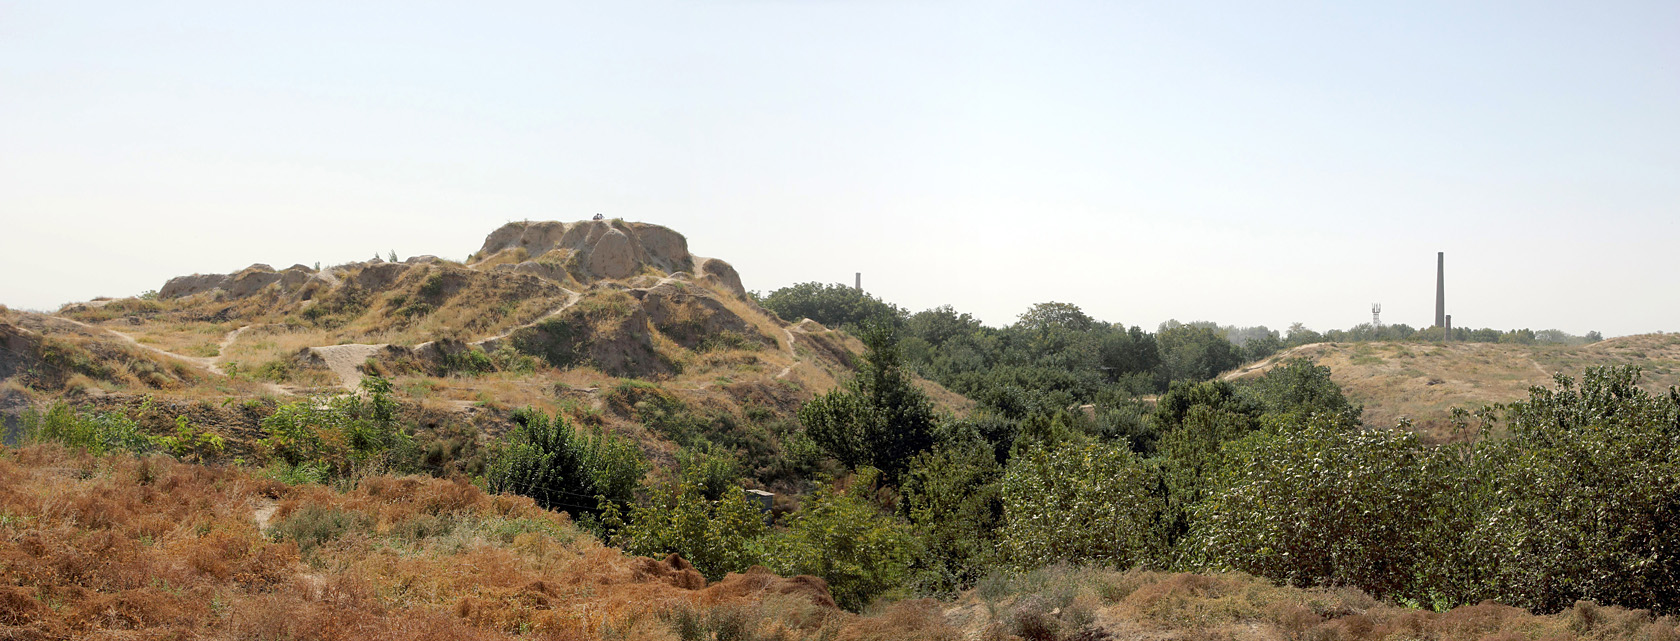 Актепа Юнусабадская, изображение ландшафта.